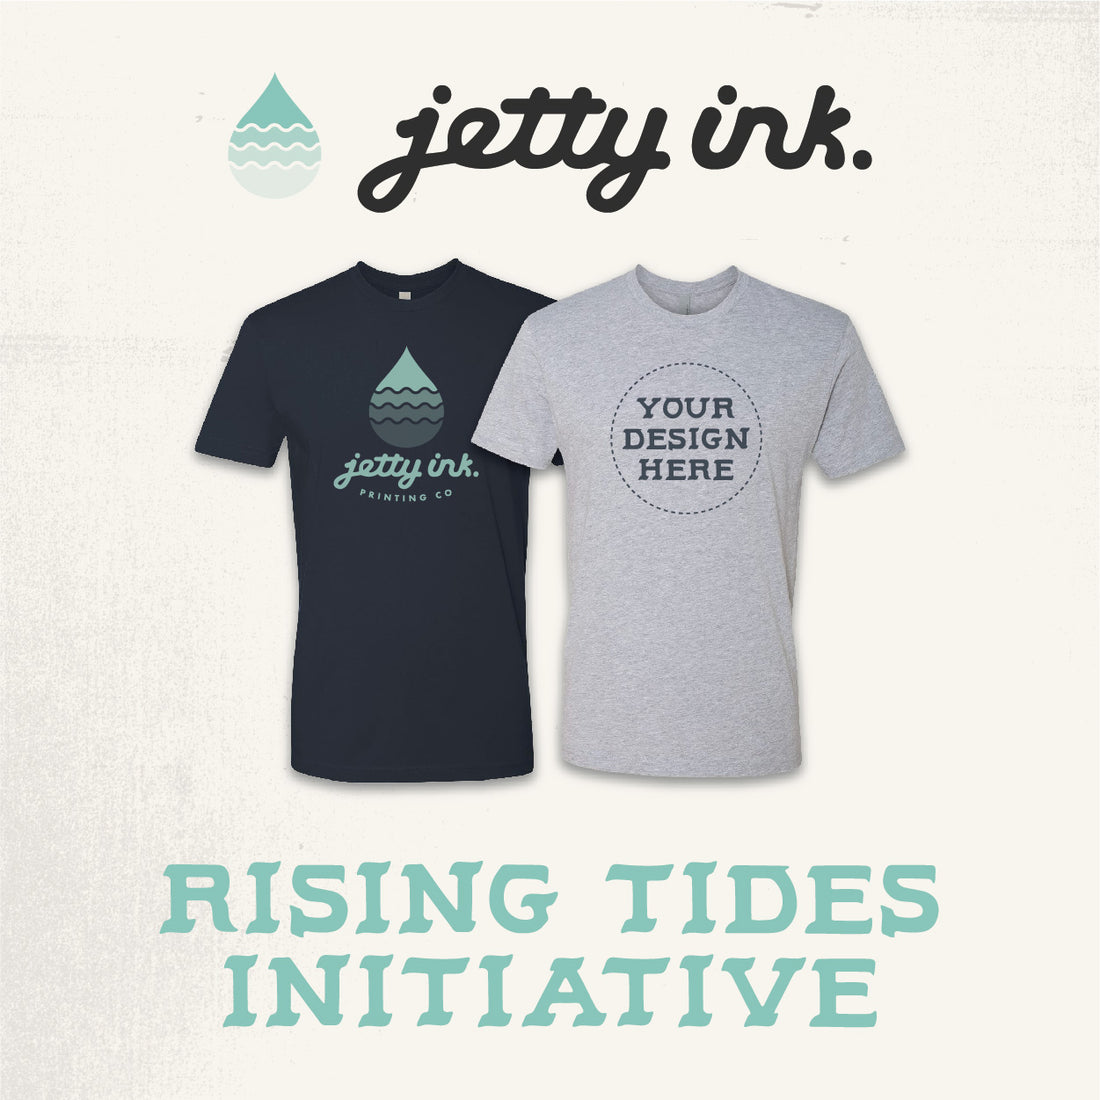 Rising Tides Initiative: Pt. 3